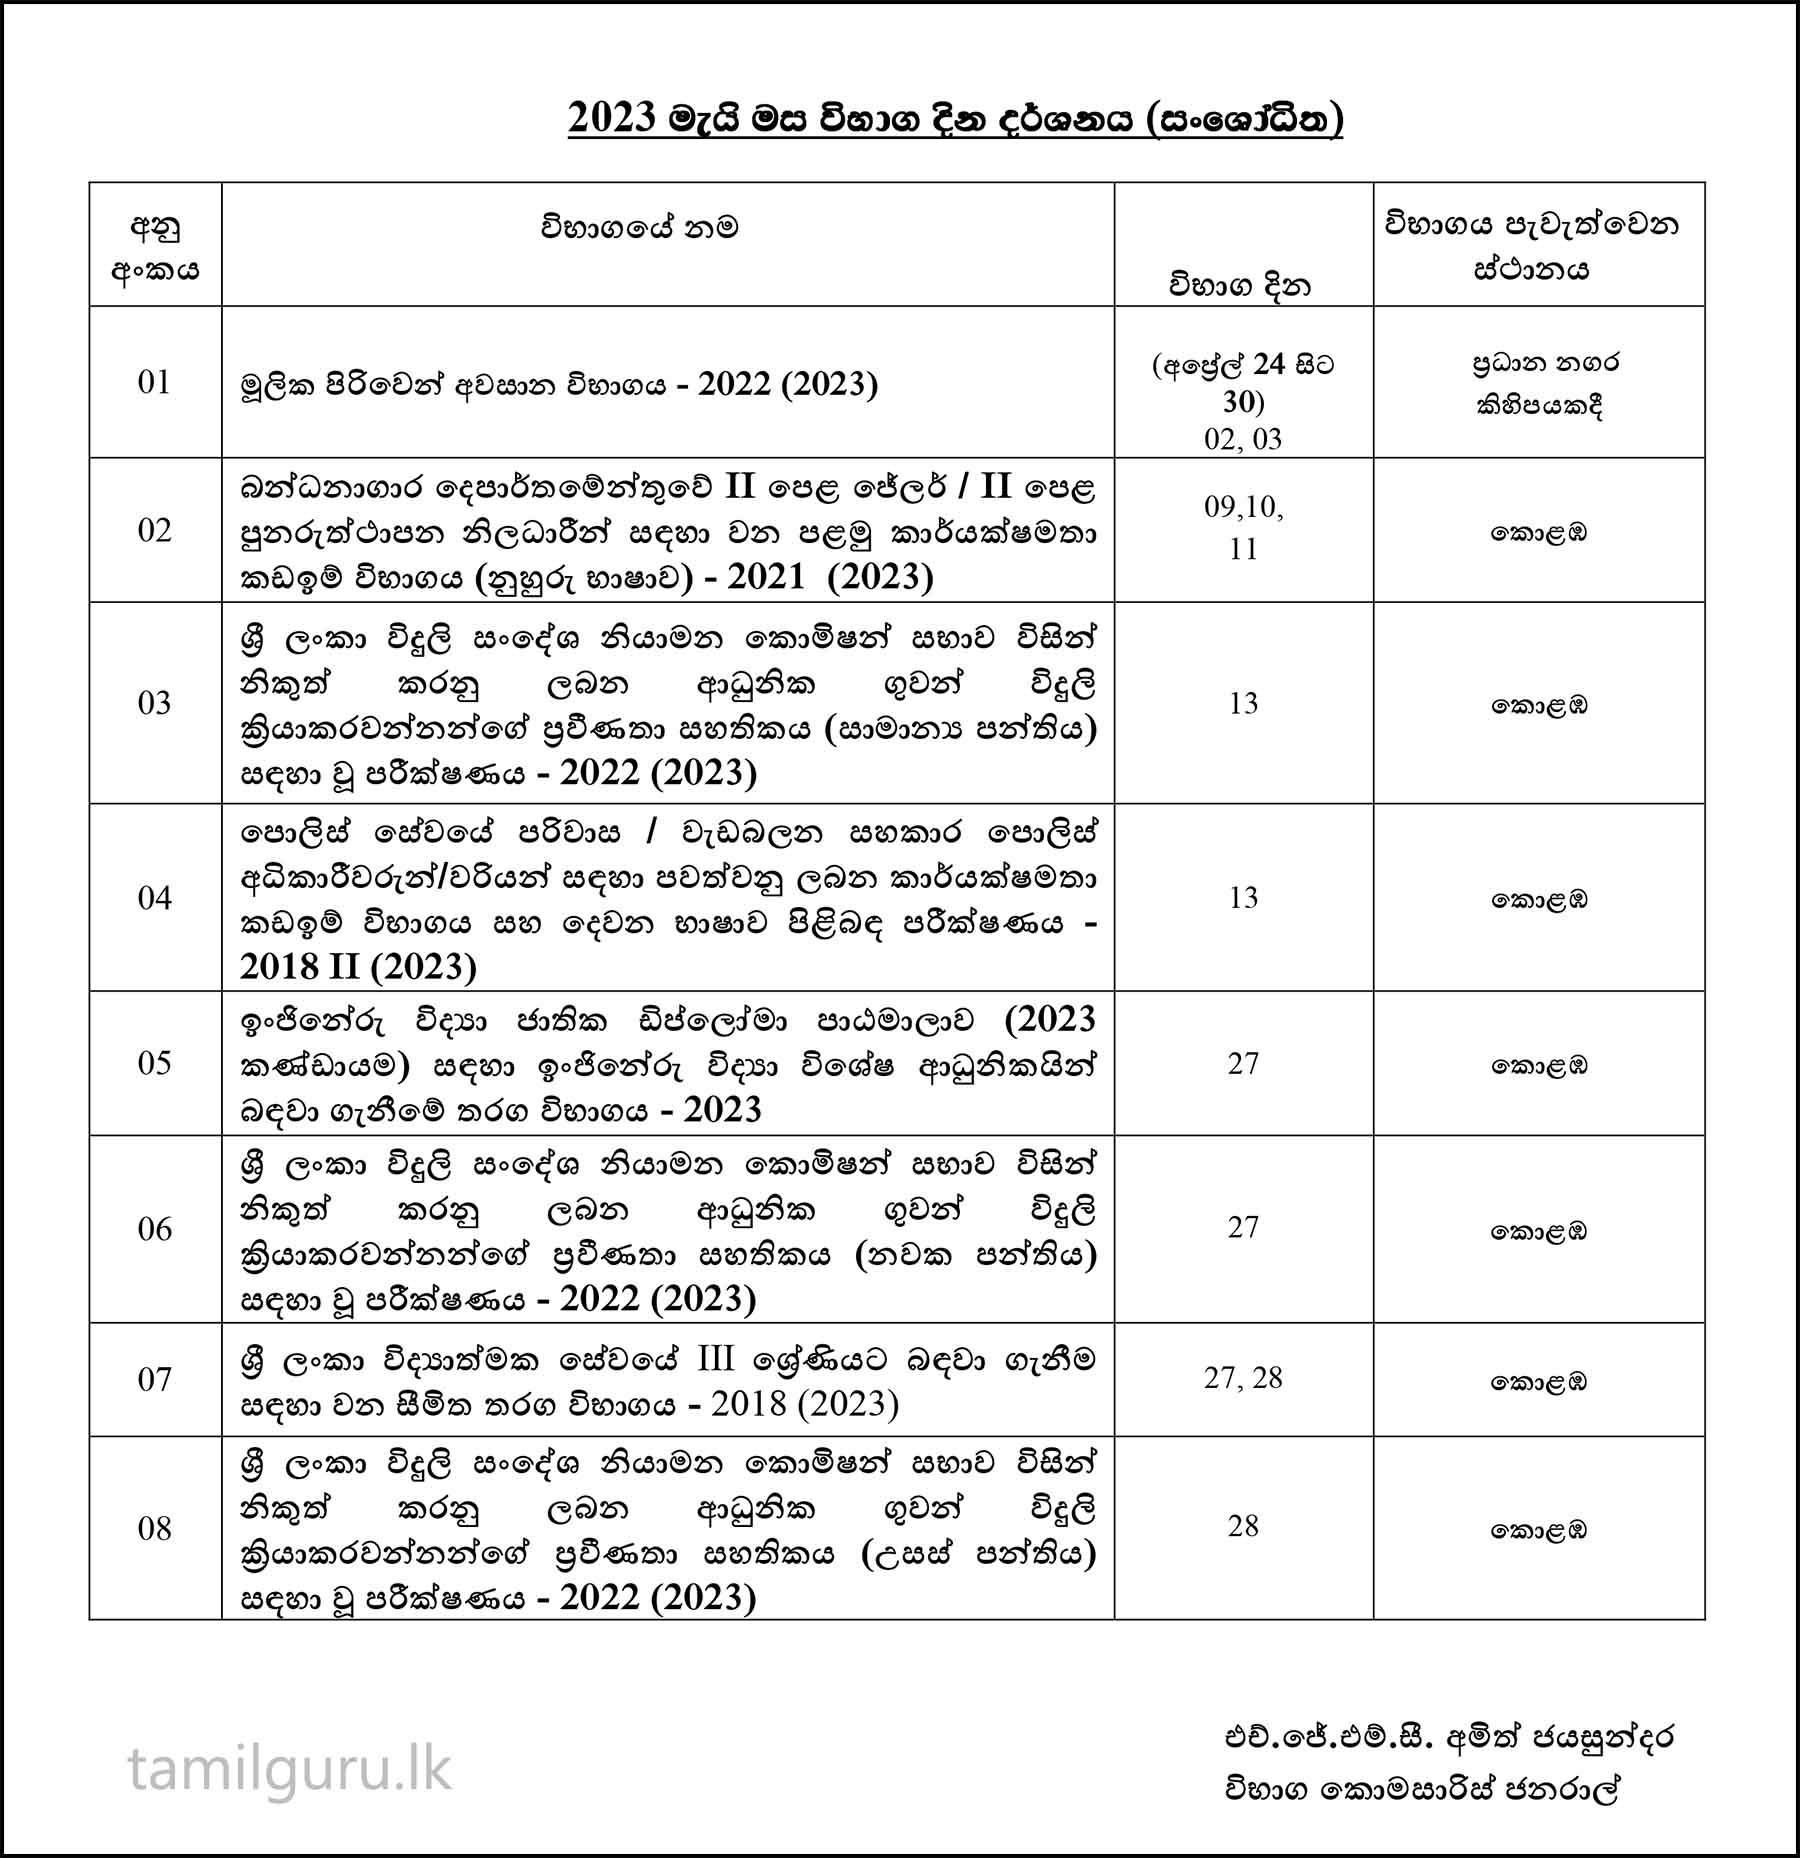 Examination Calendar for May 2023 (Amended) - Department of Examinations